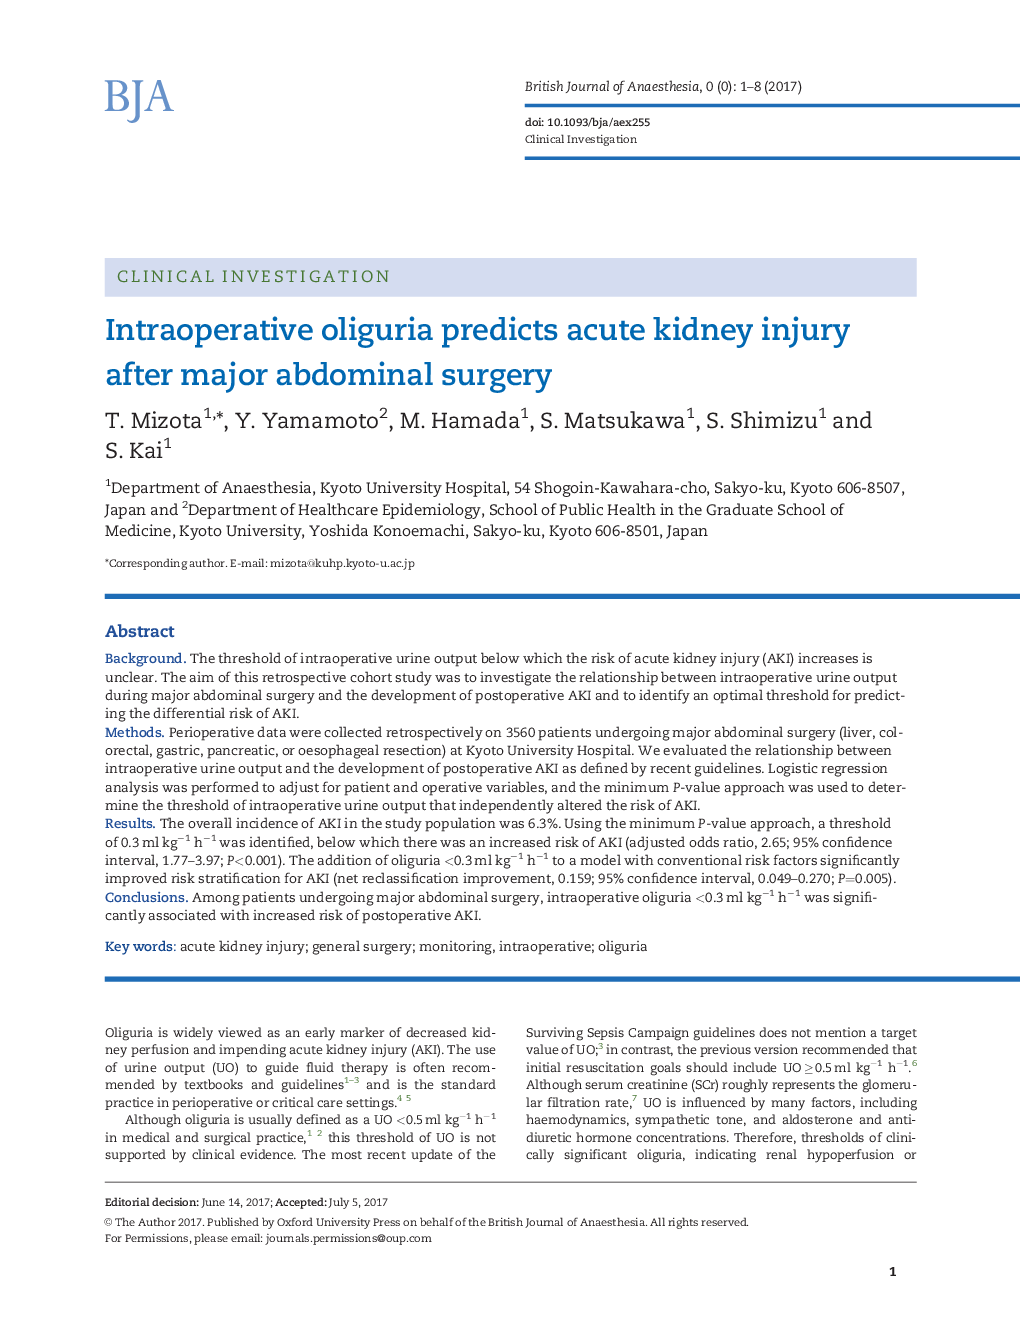 Intraoperative oliguria predicts acute kidney injury after major abdominal surgery